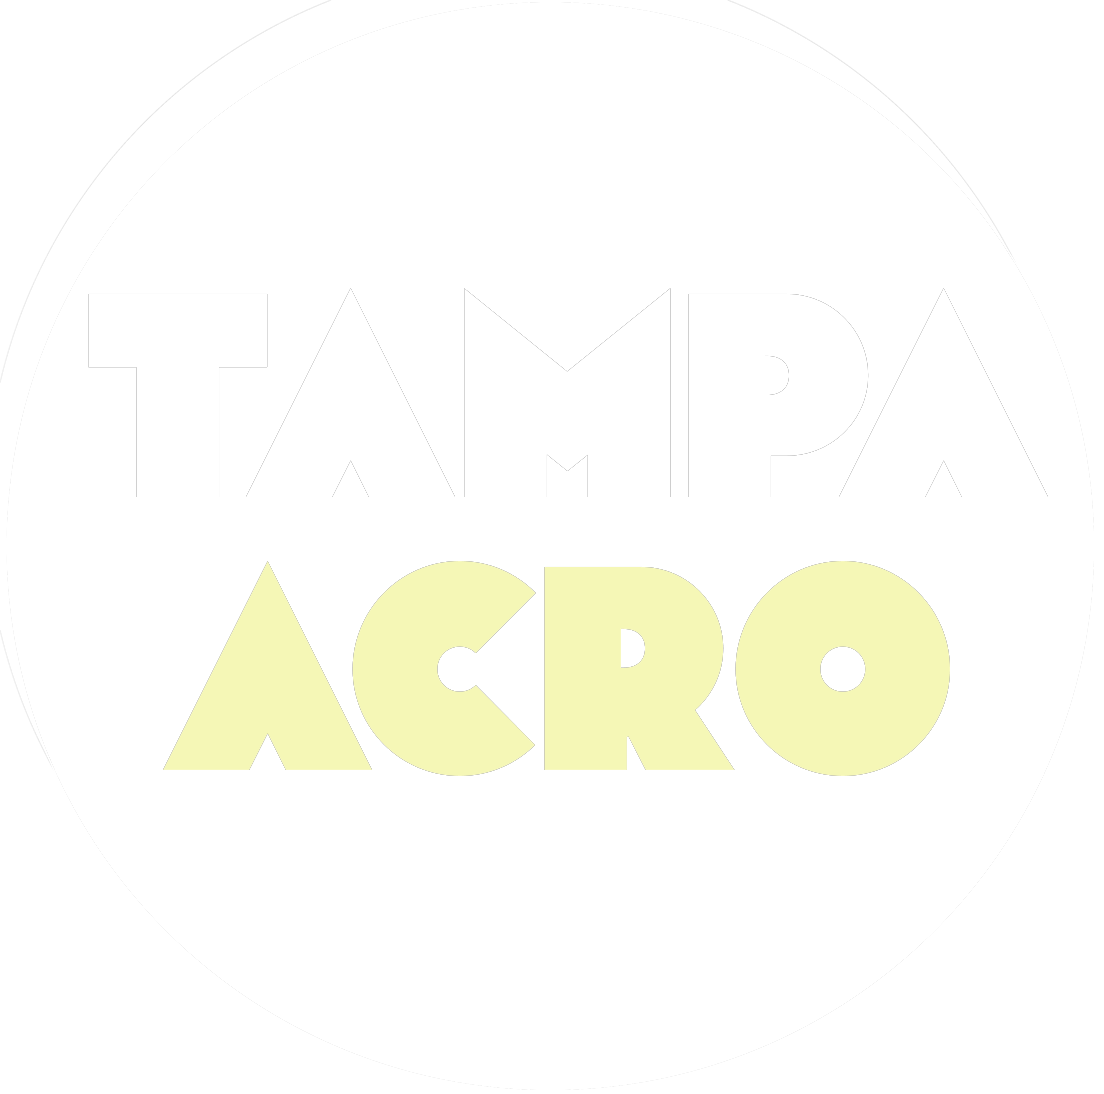 Tampa Acro Yoga